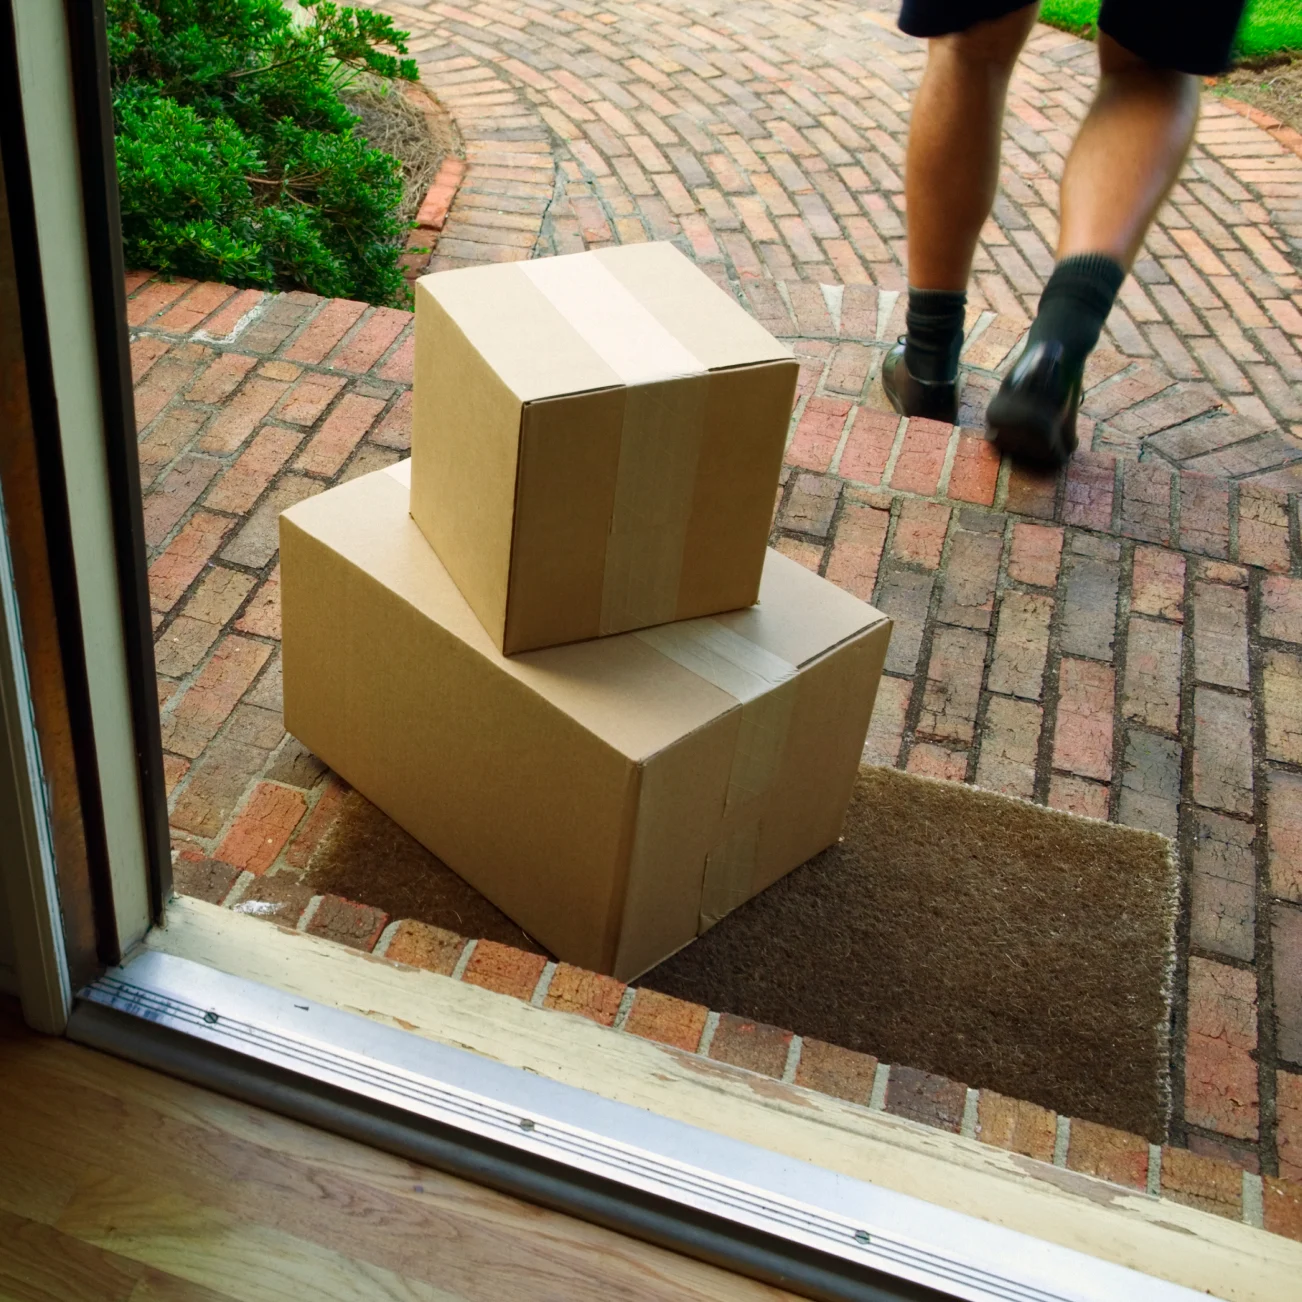 2 boxes on doormat seen through an open door with delivery driver walking away